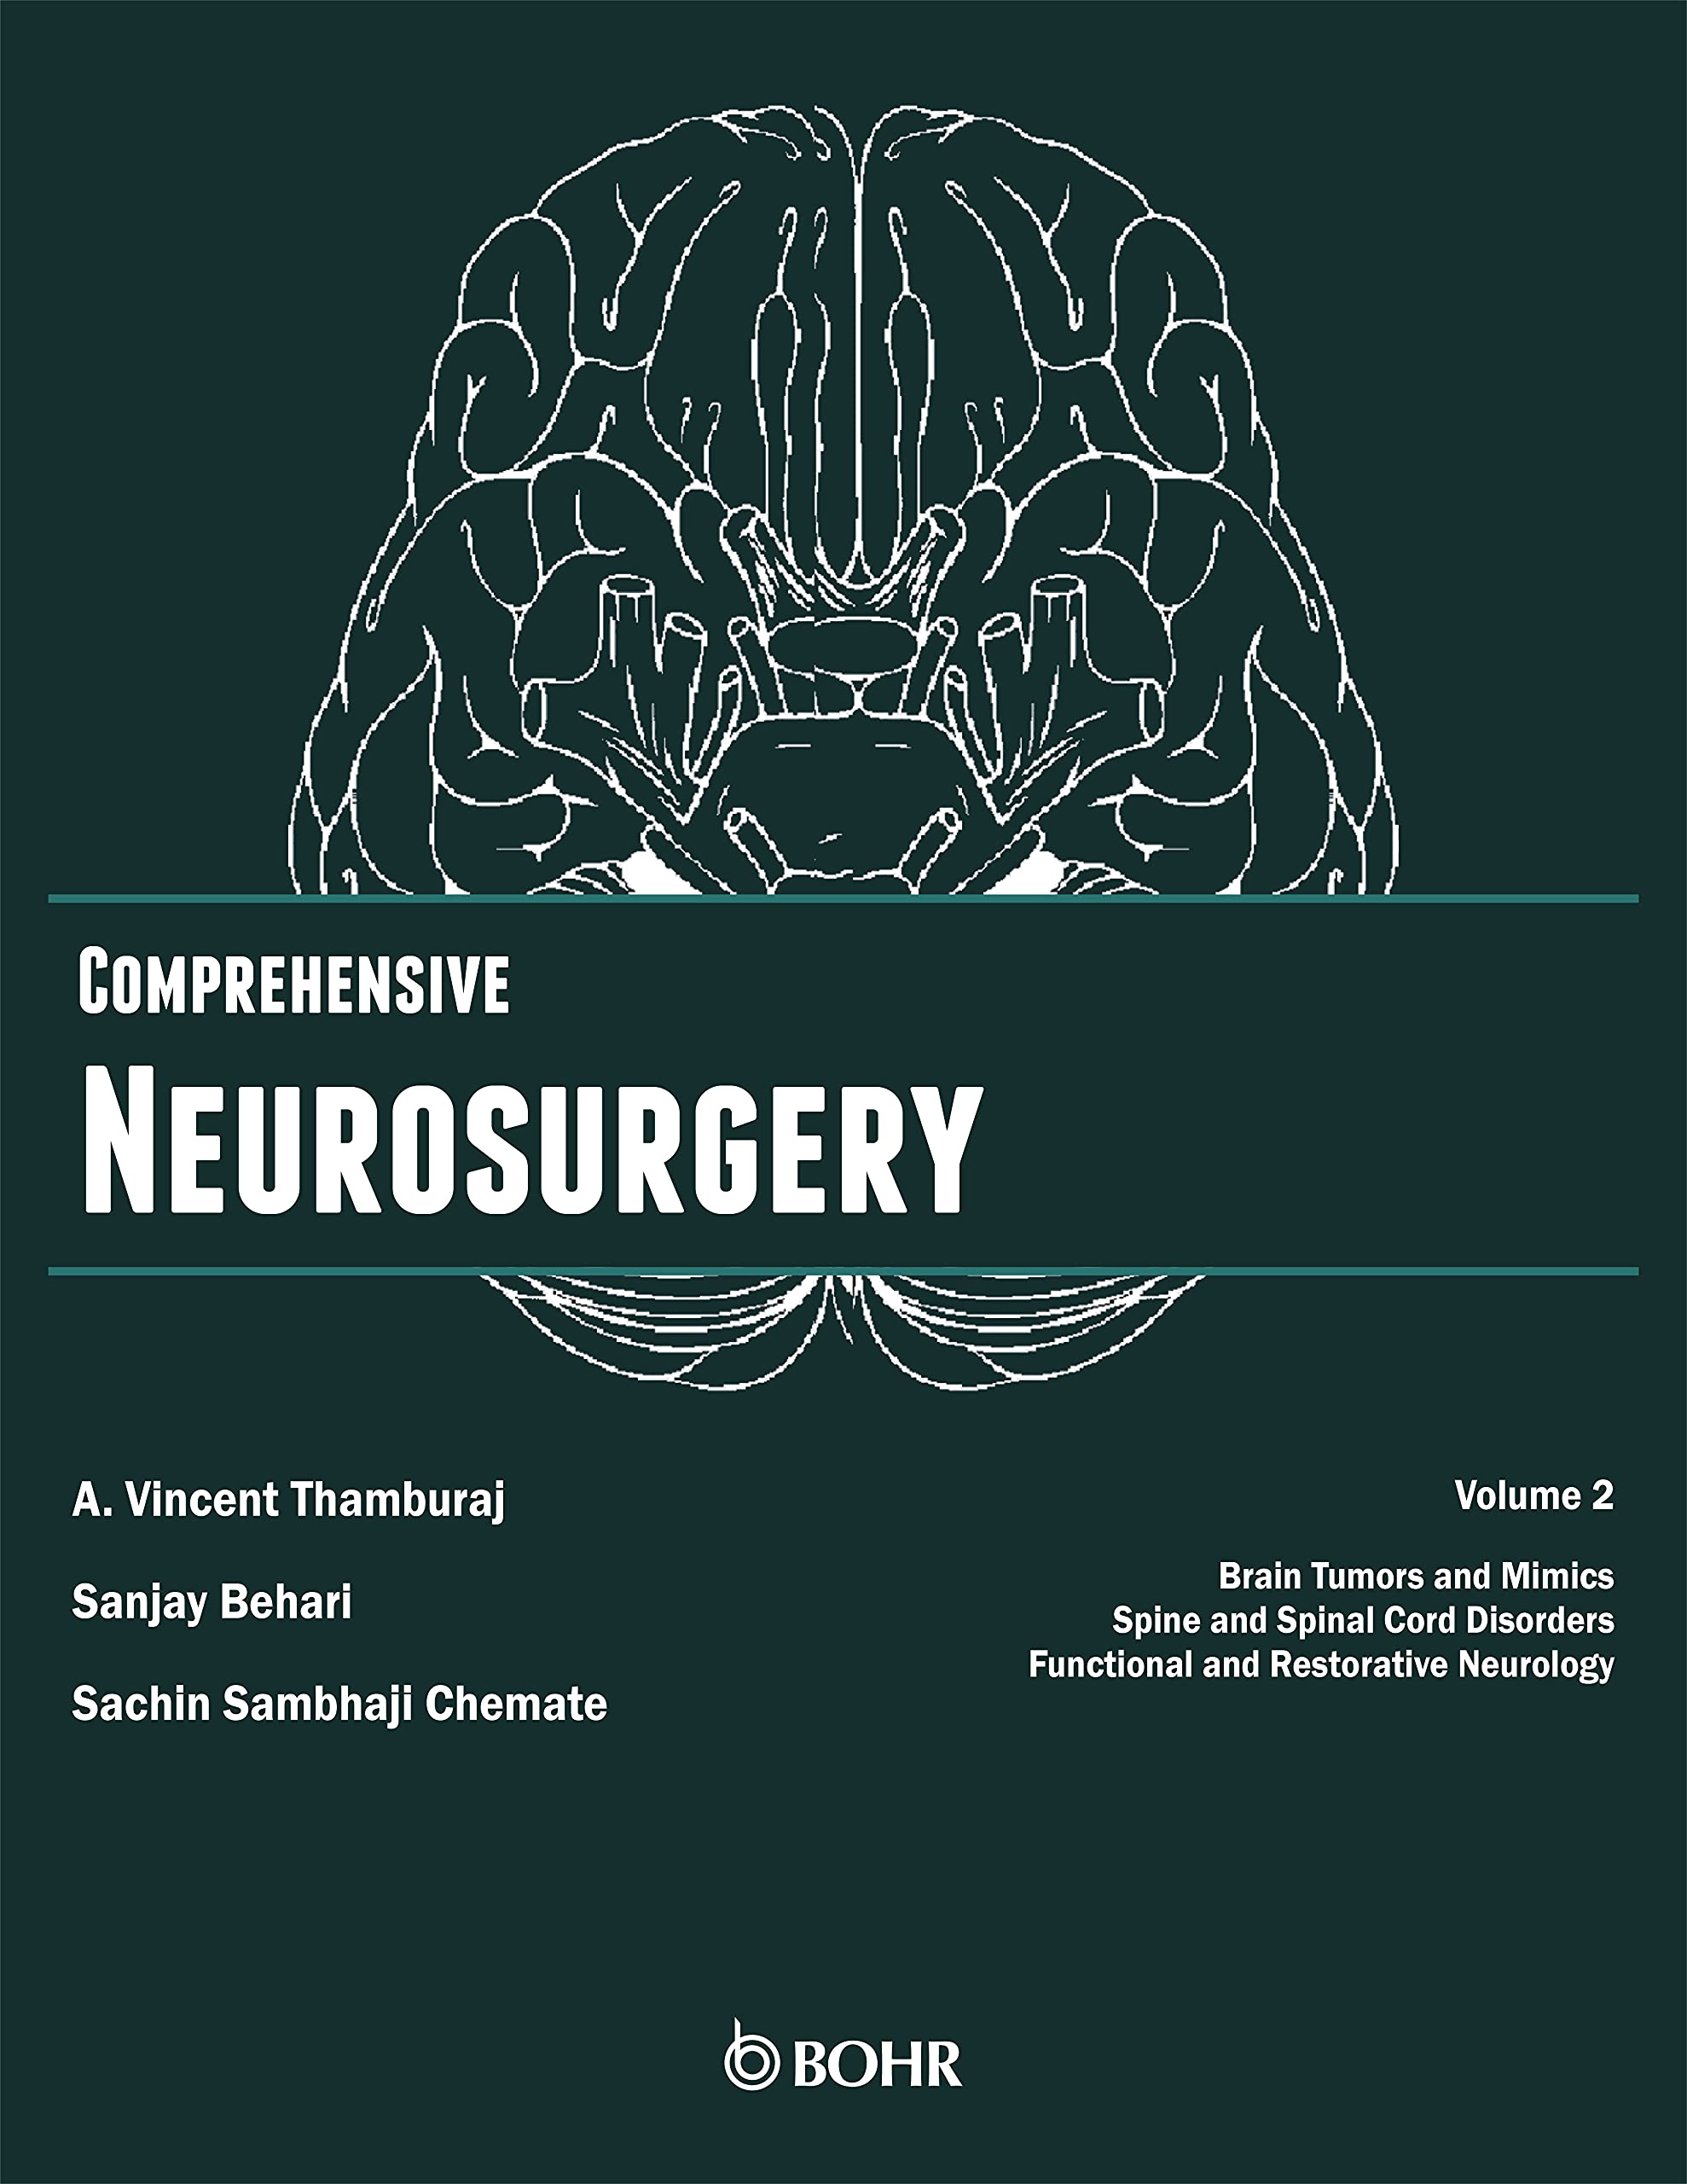  Comprehensive Neurosurgery (Volume II)